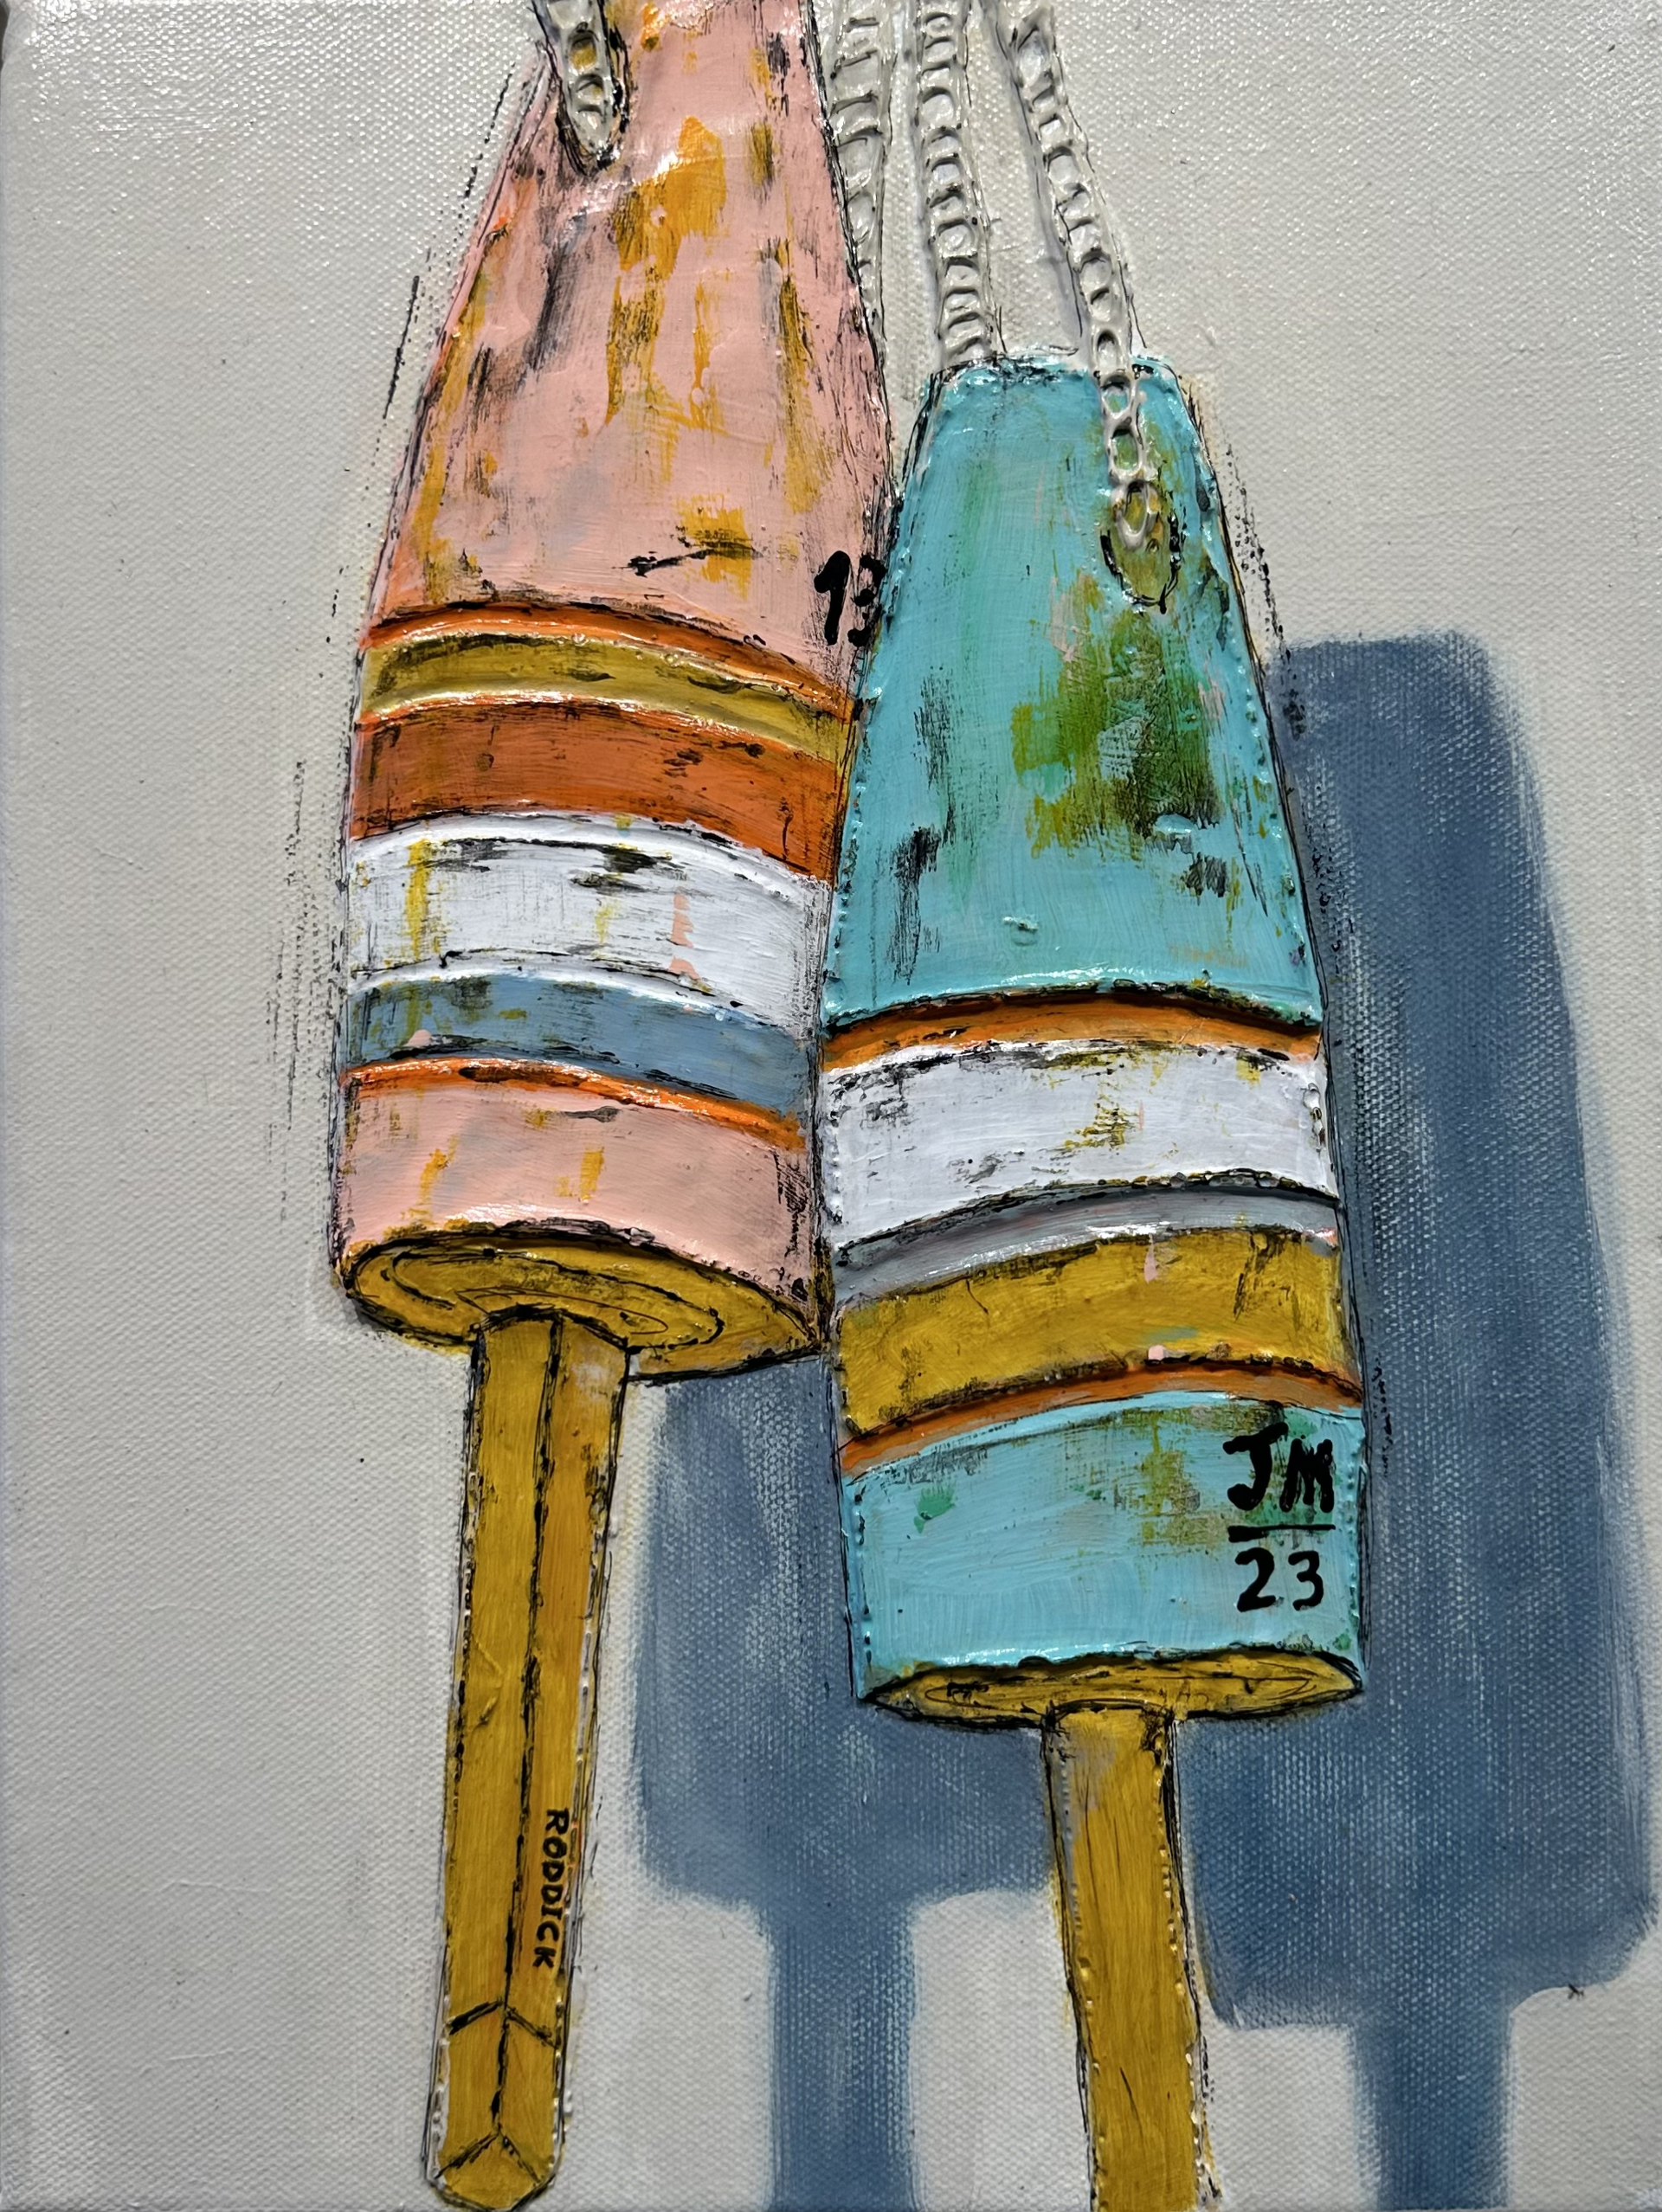 Buoy 23 by Christopher Roddick